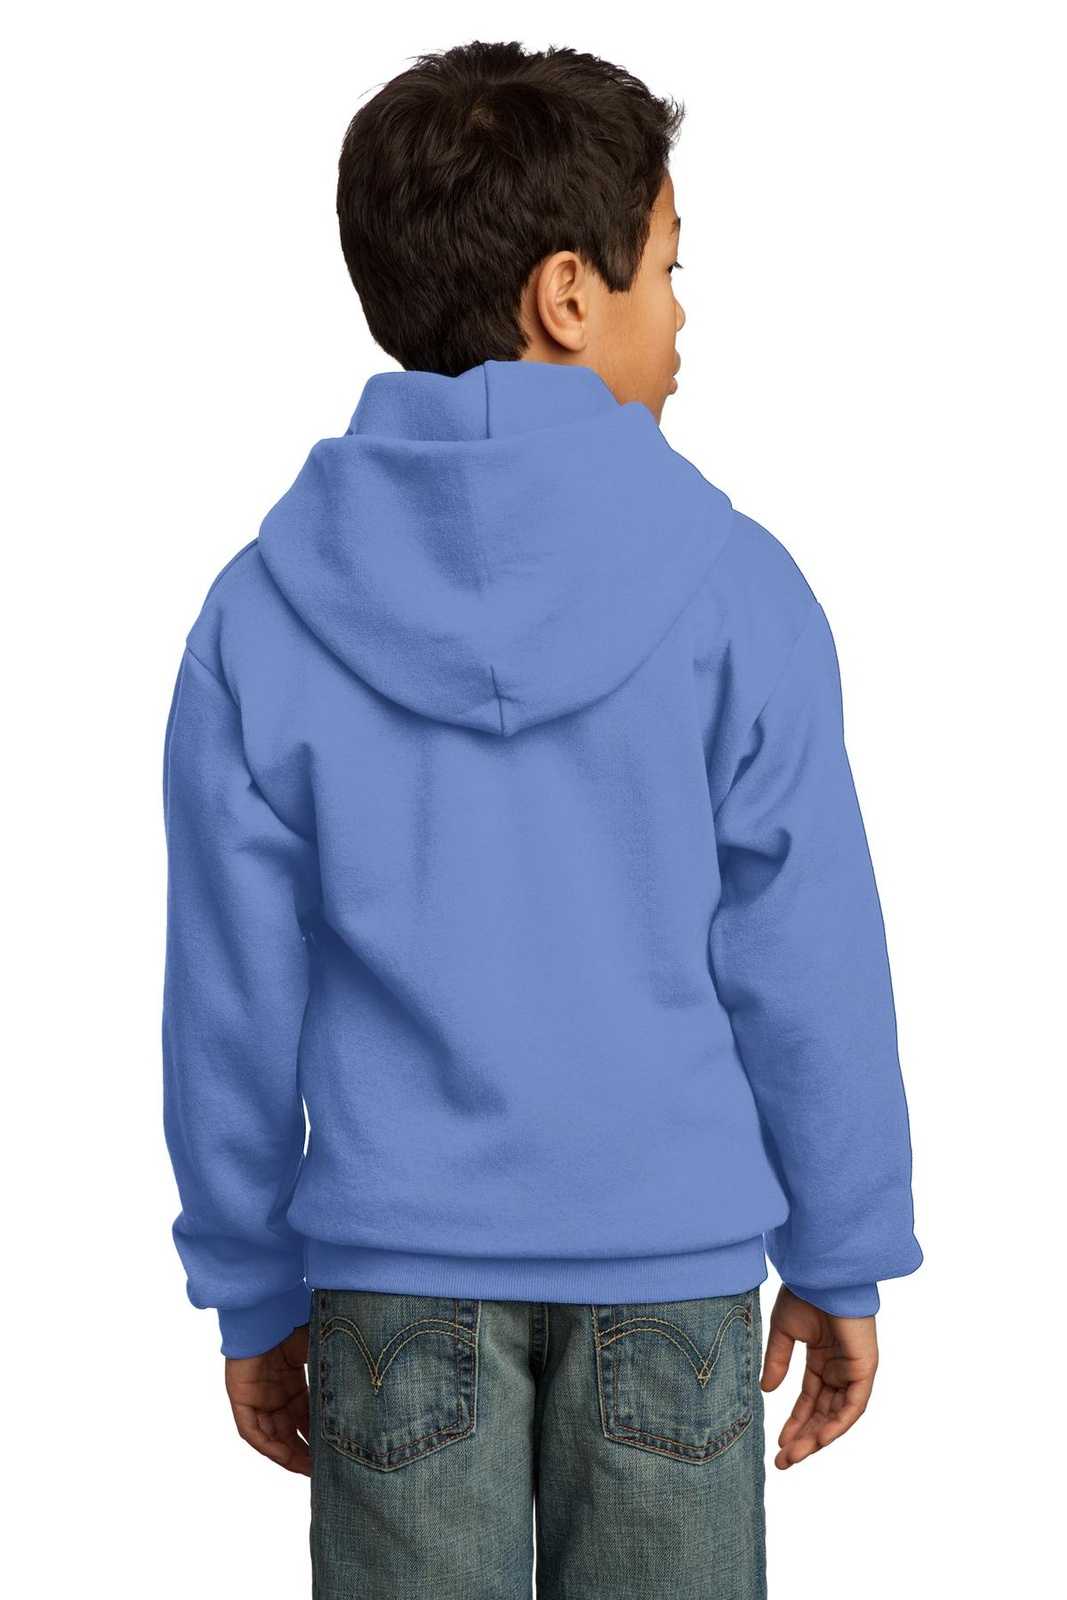 Port & Company PC90YH Youth Core Fleece Pullover Hooded Sweatshirt - Carolina Blue - HIT a Double - 1